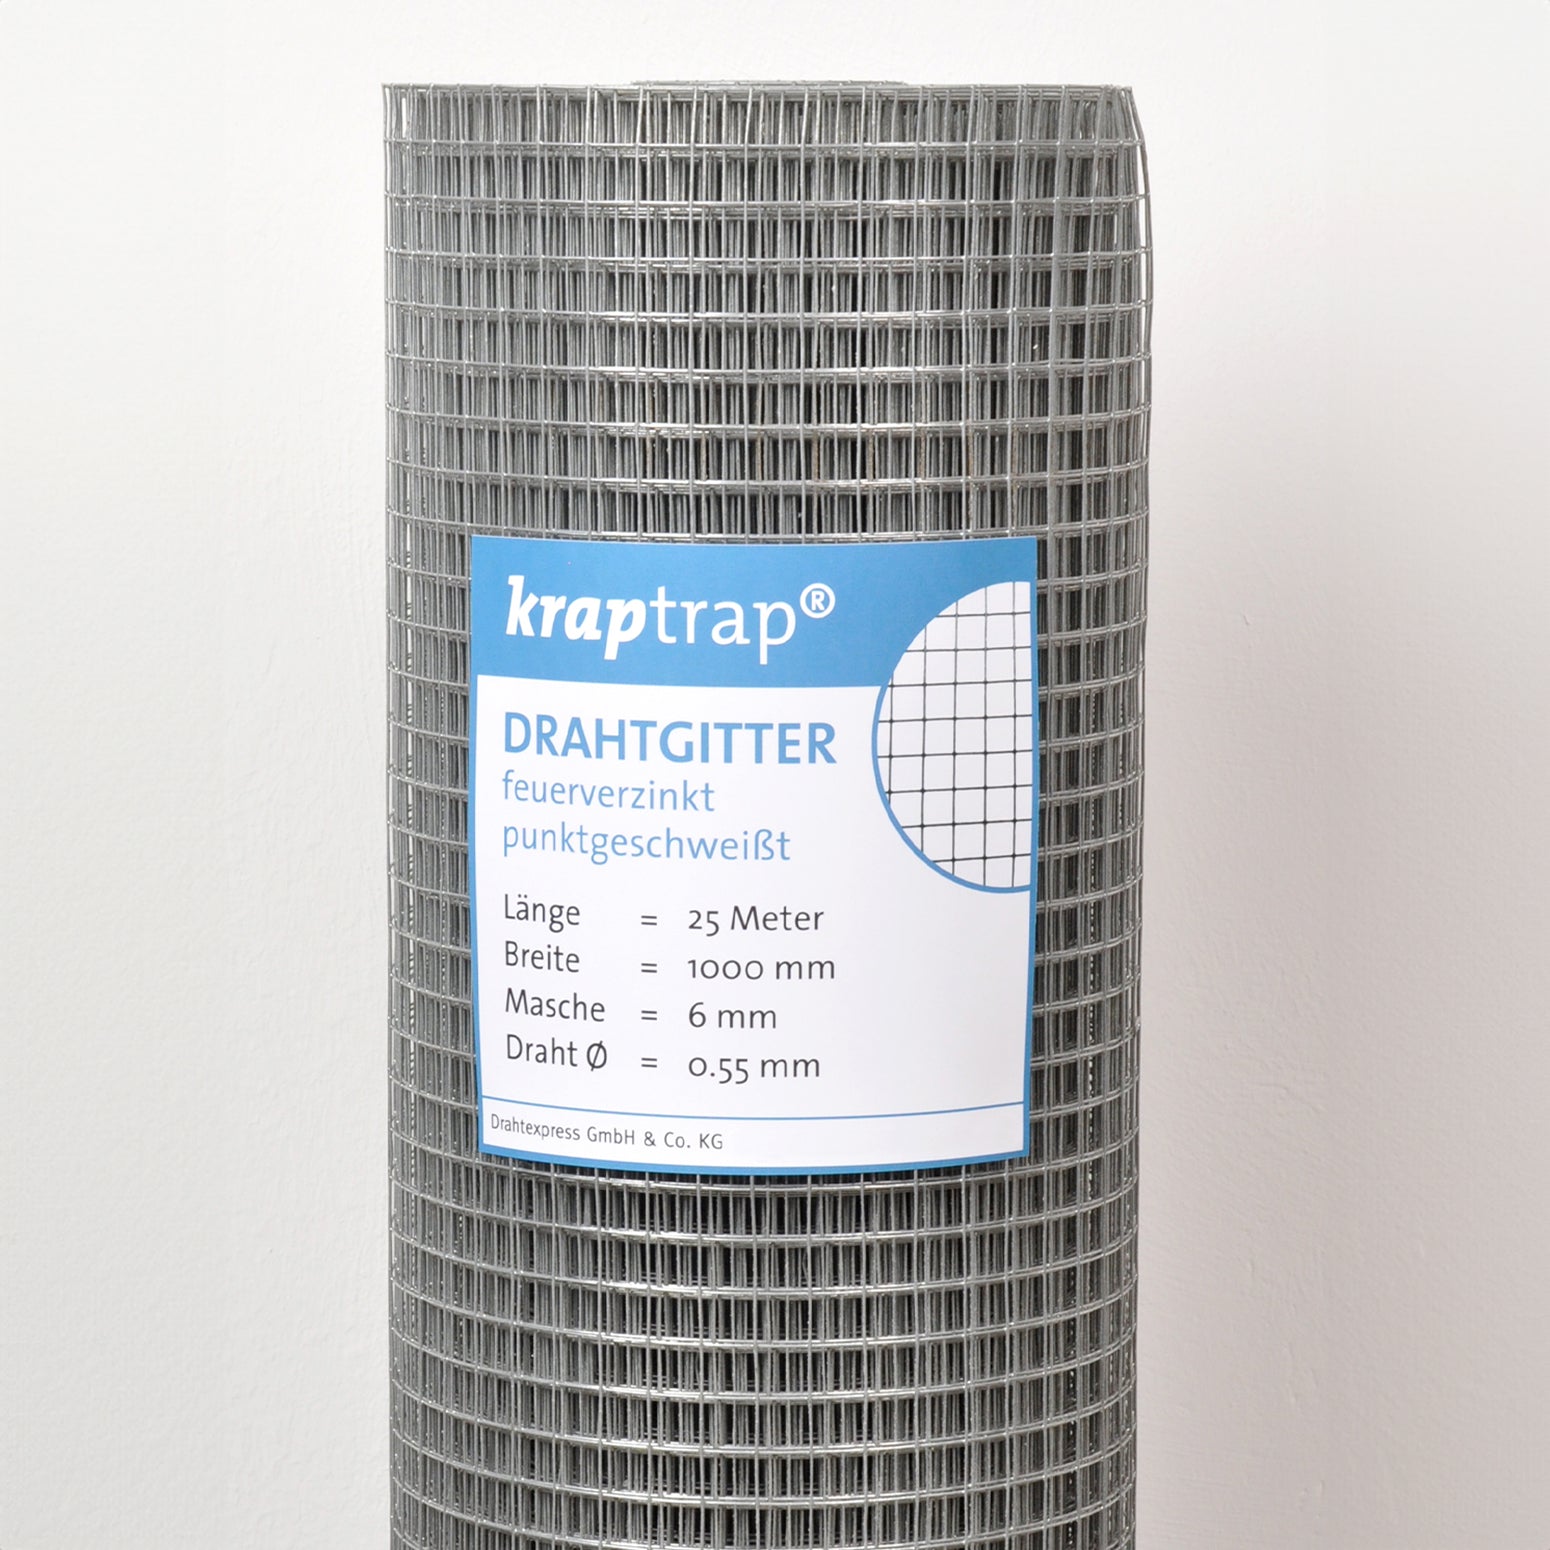 KrapTrap® feuerverzinktes Drahtgitter 6x6 mm mit 0,55 mm Stärke